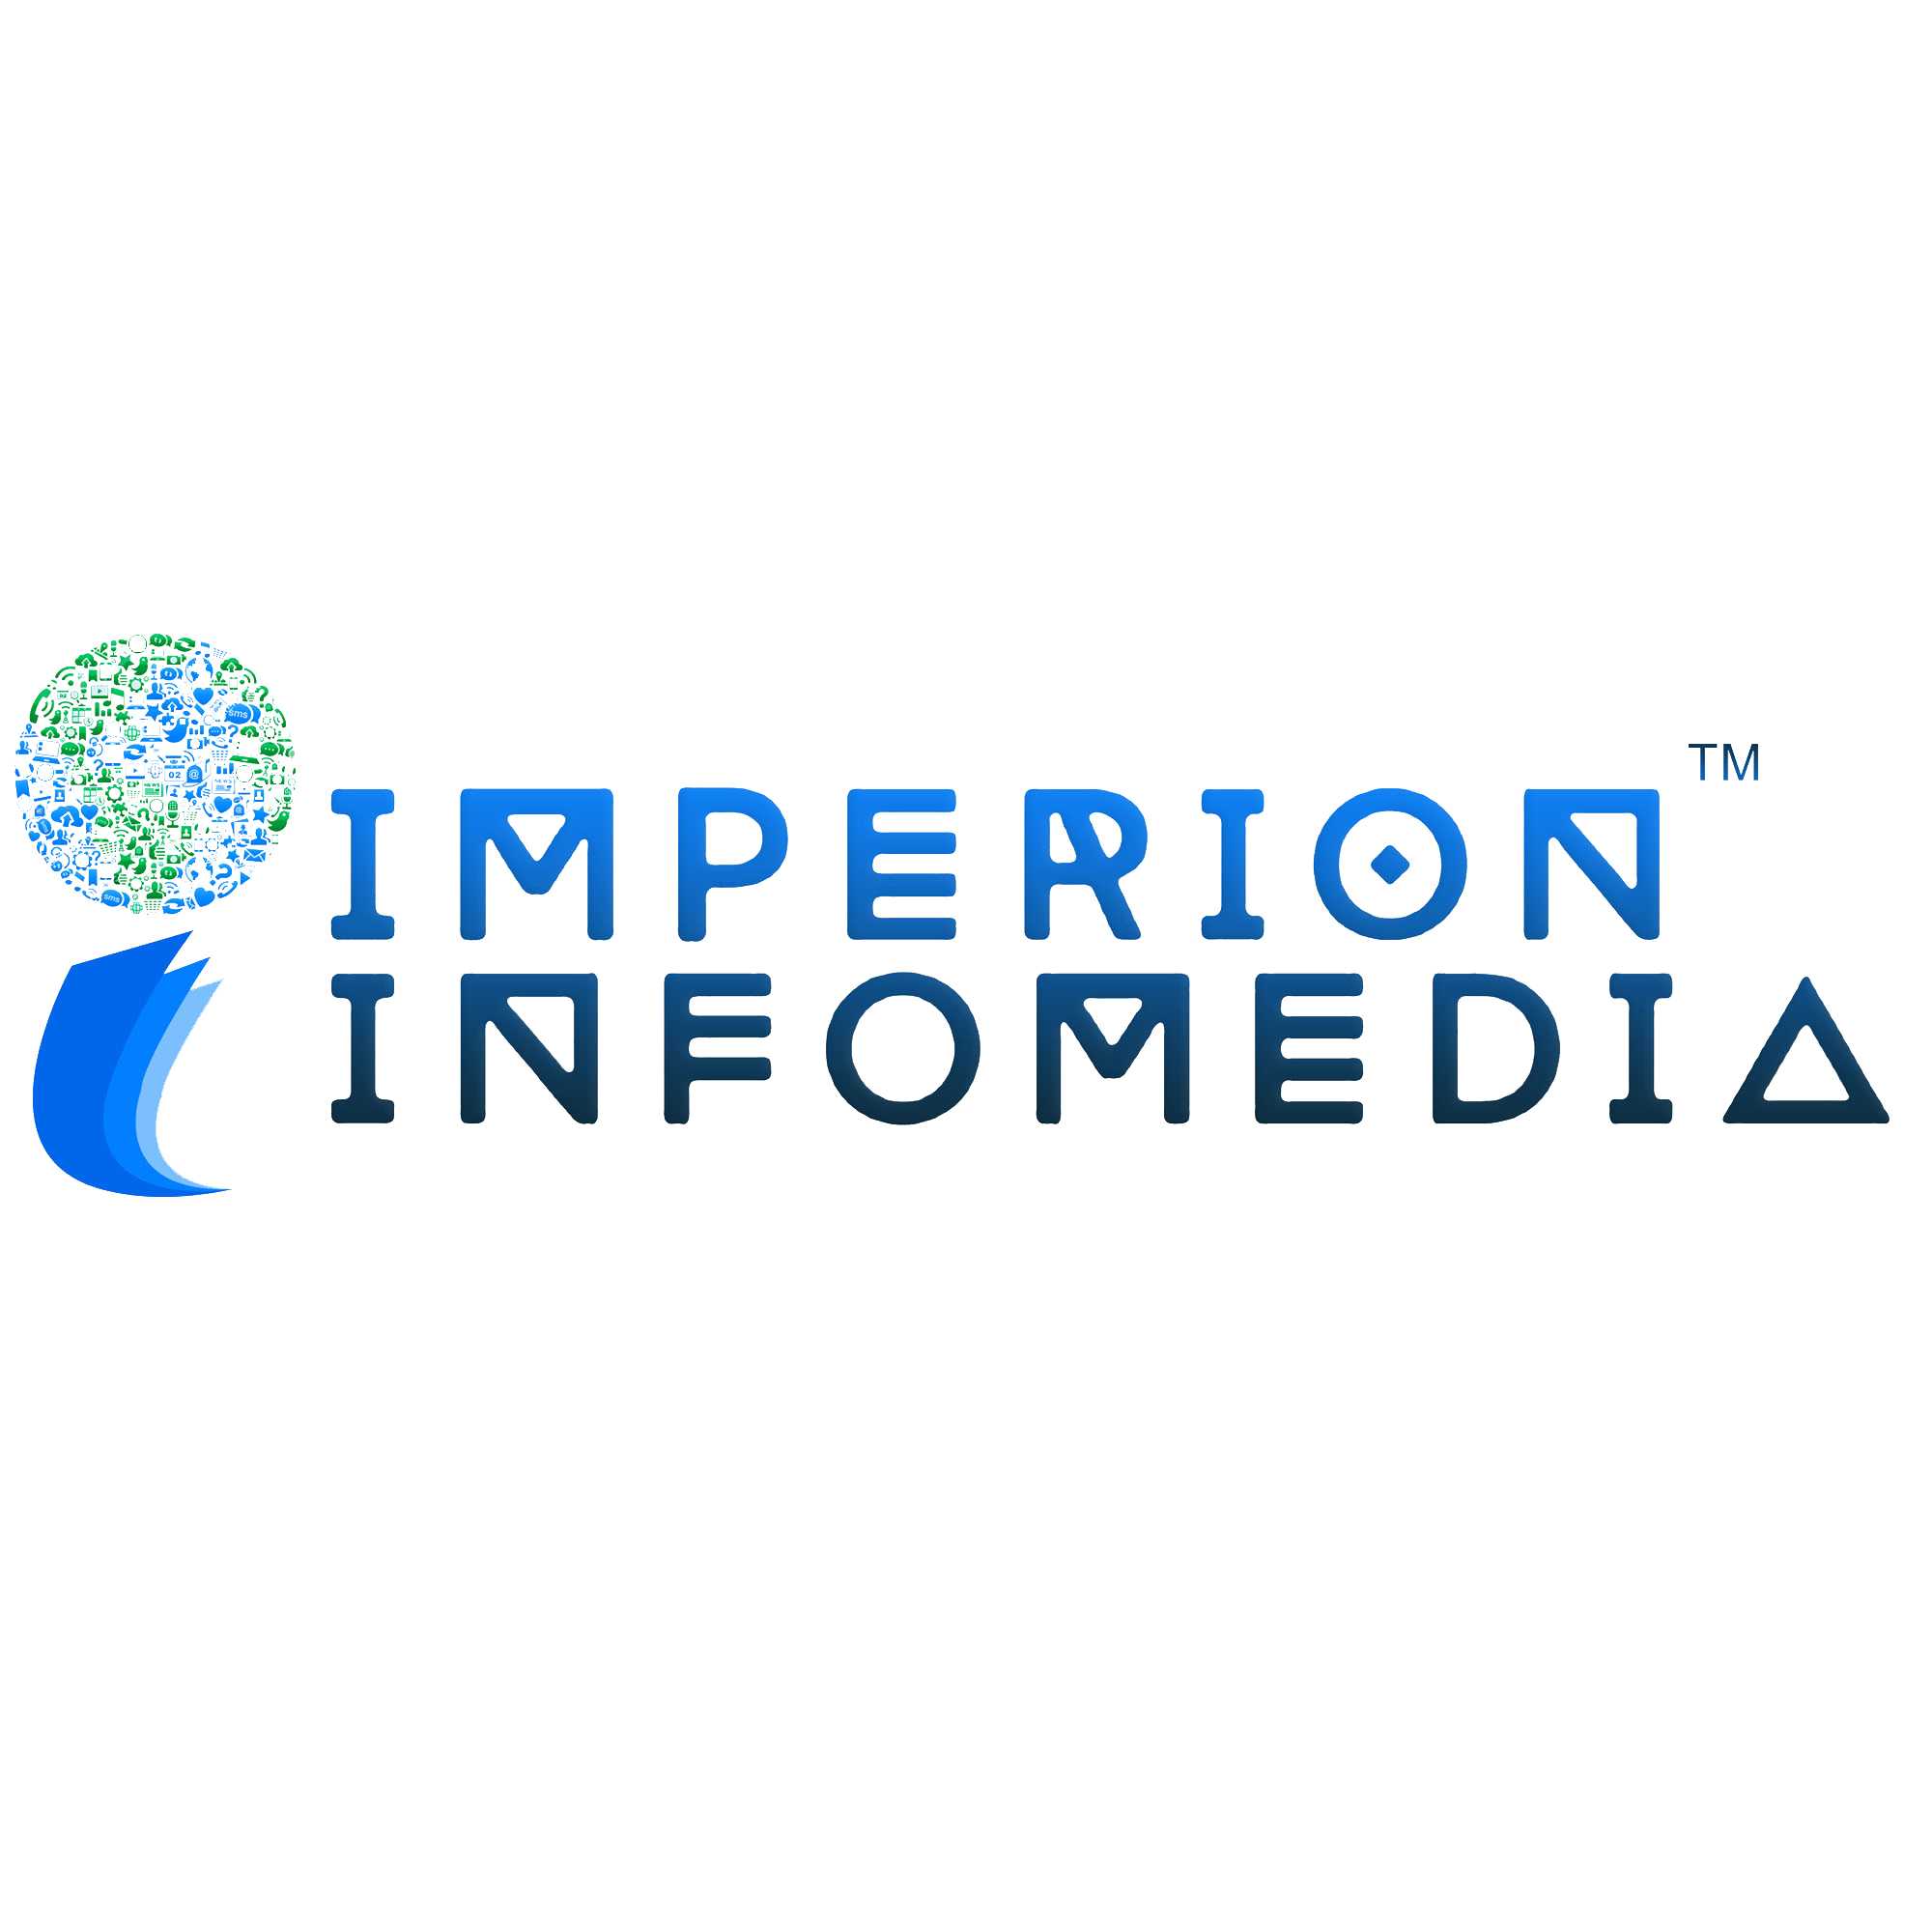 Imperion Infomedia Profile Picture